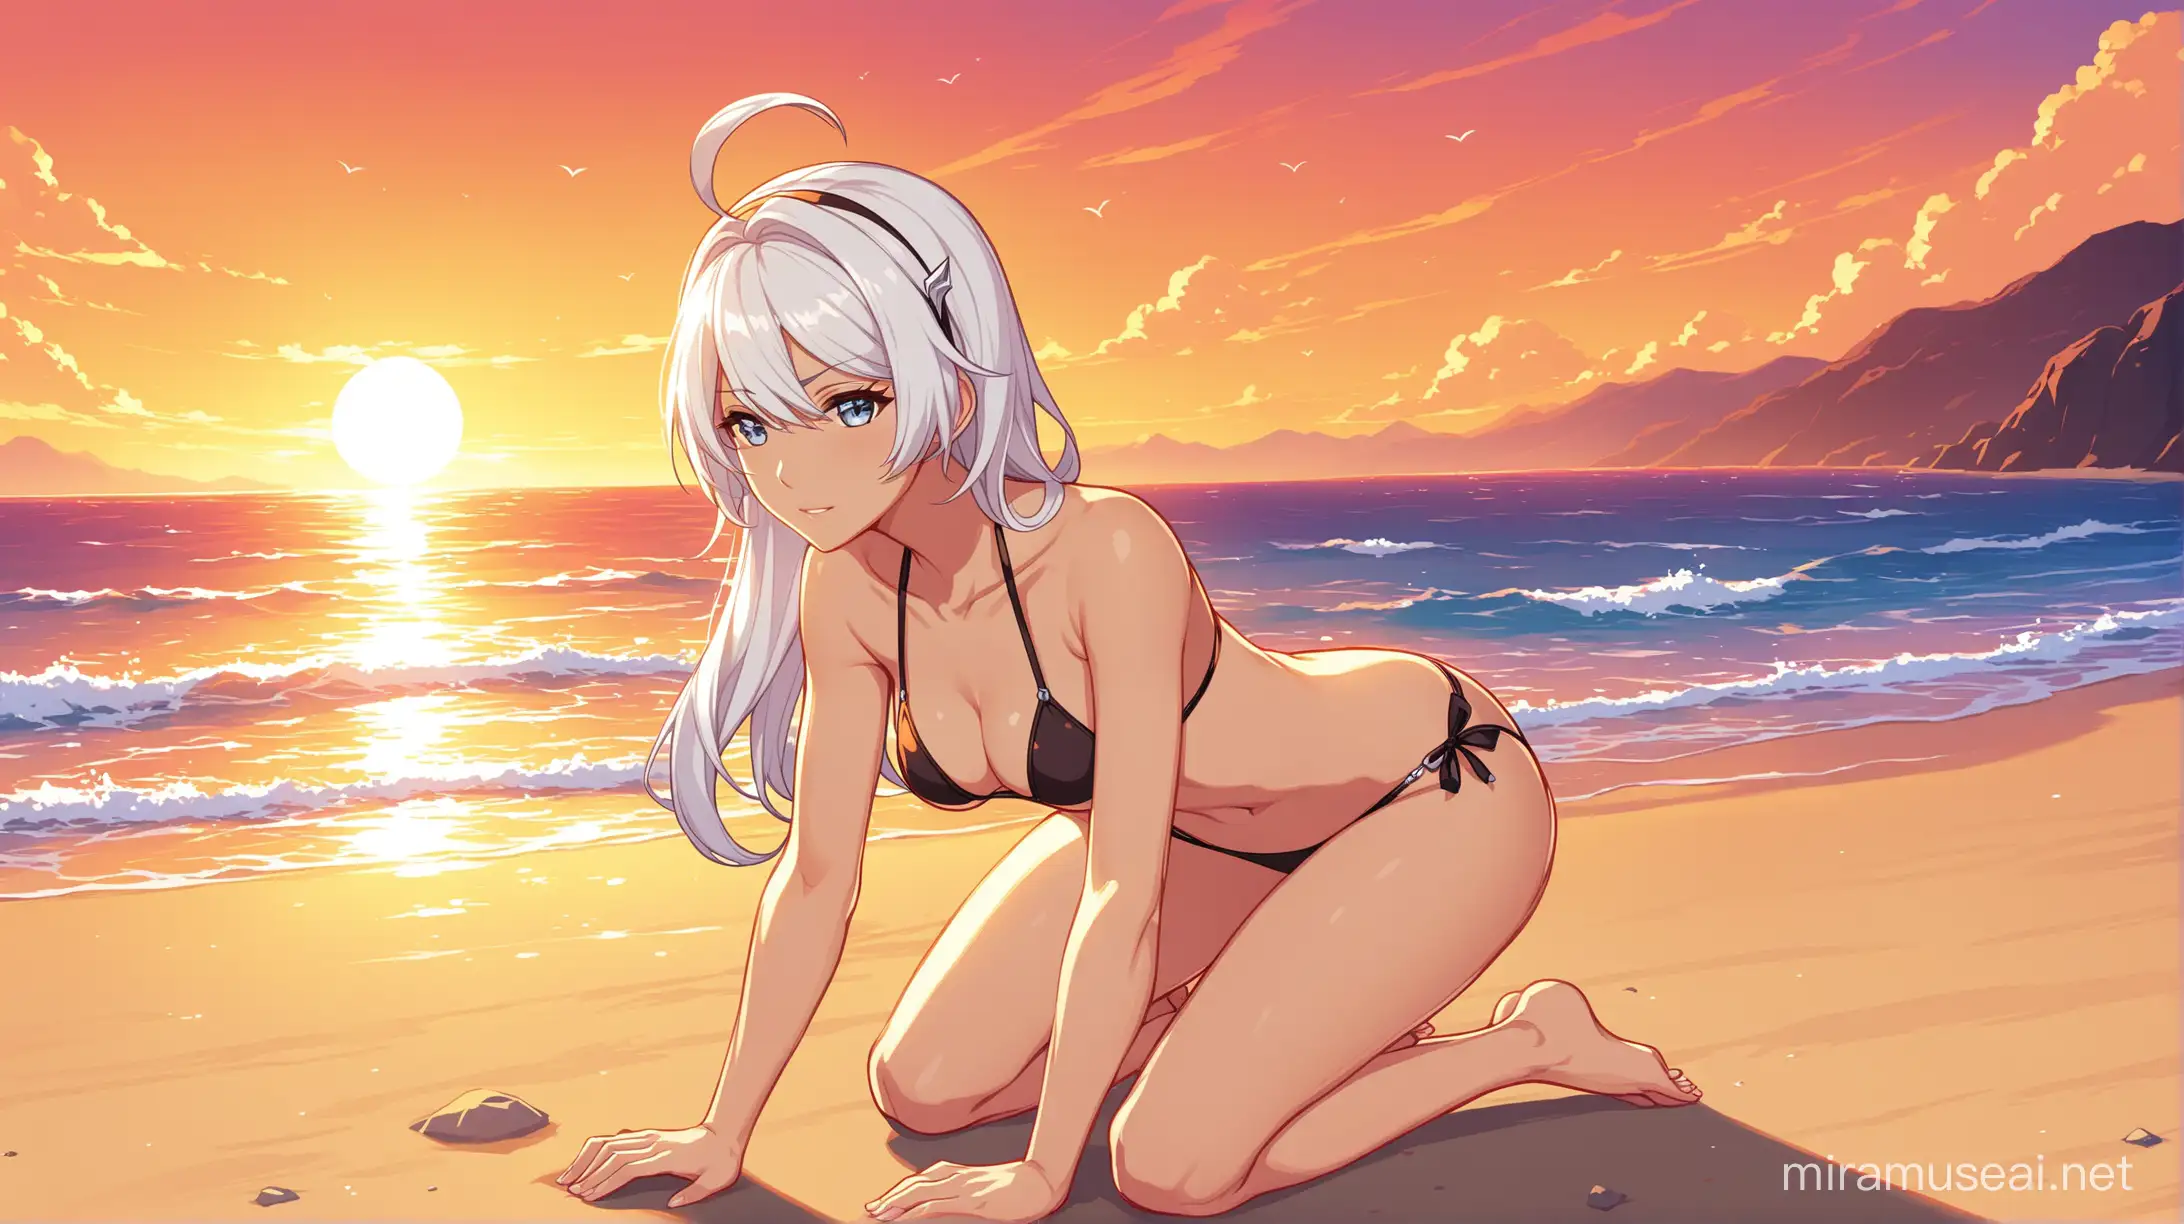 Kiana Kaslana character from Honkai Impact 3rd pray kneeling touching the ground in the beach in tiny bikini's sunset